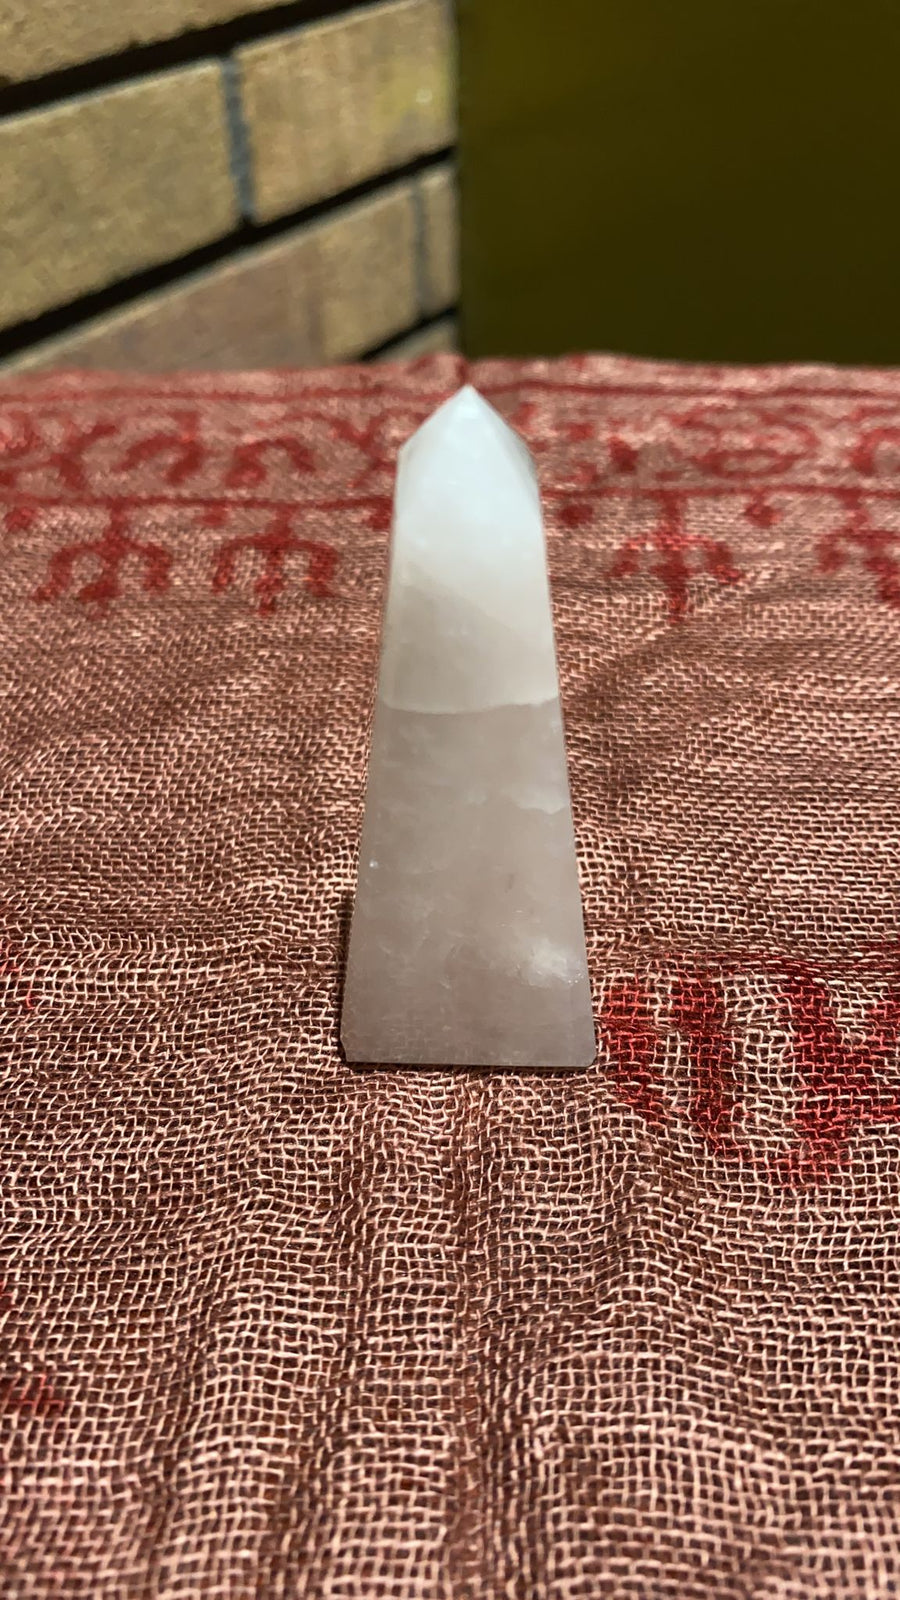 rose quartz obelisk